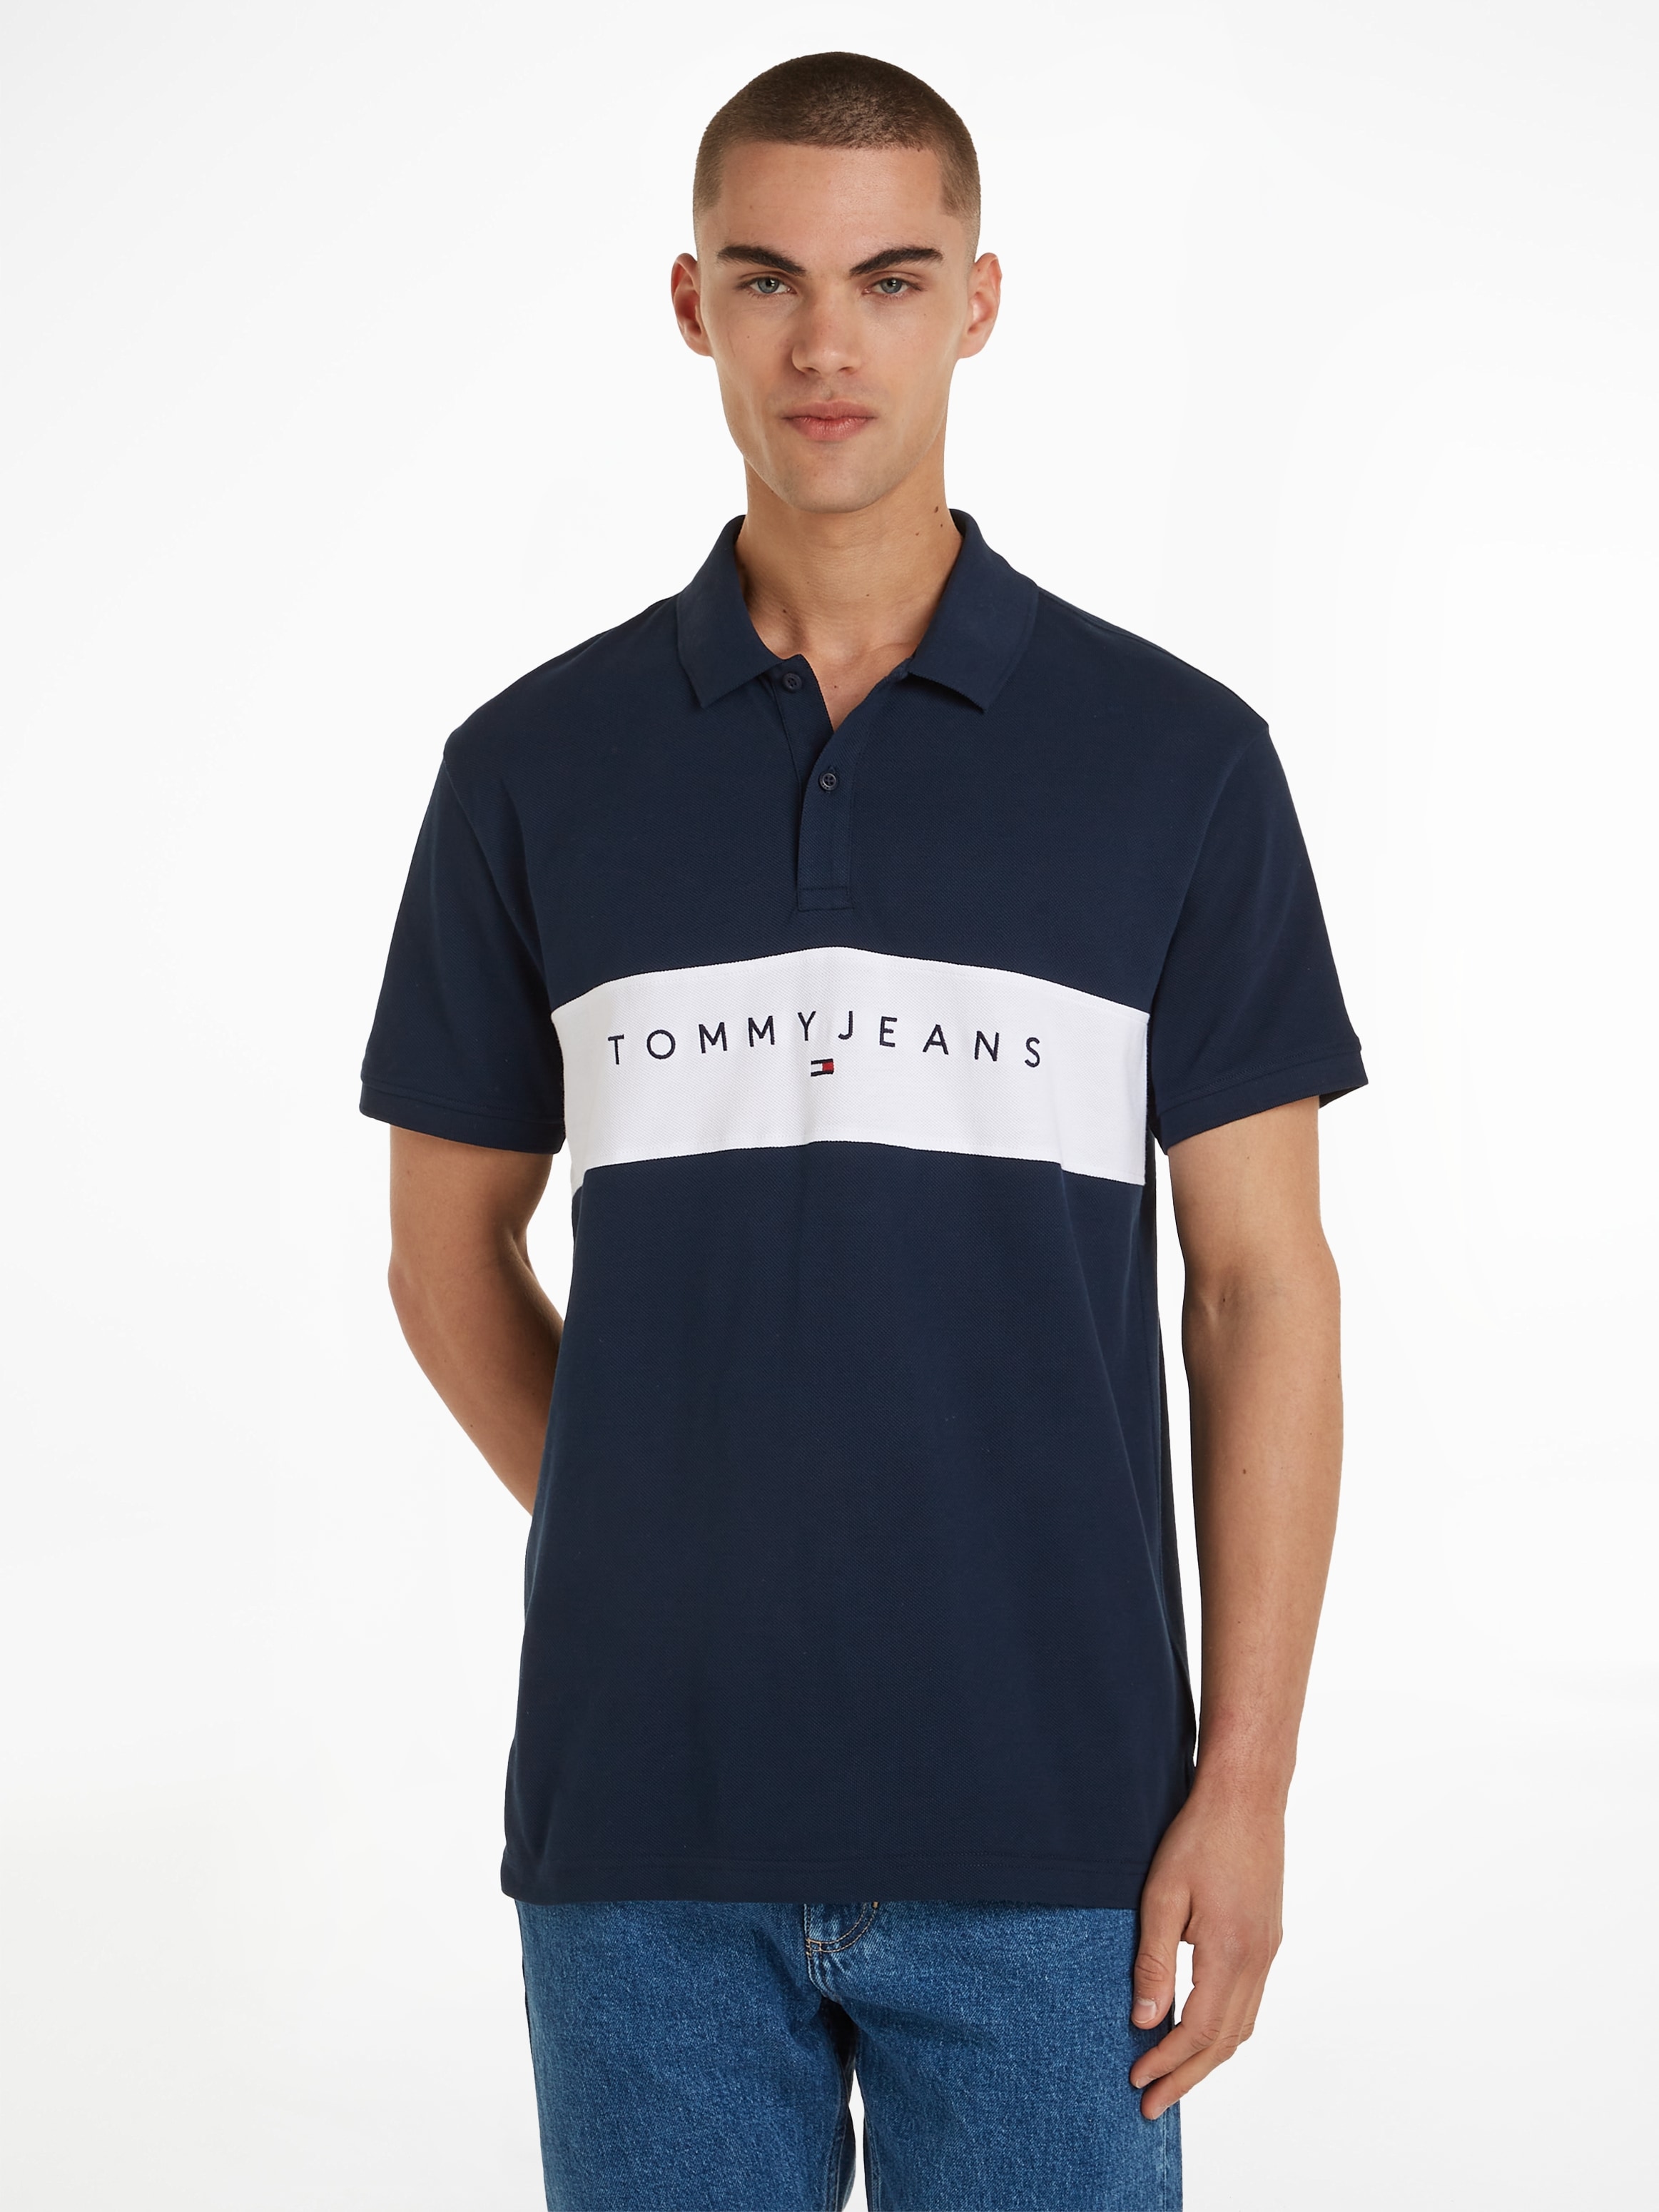 Tommy Jeans Poloshirt »TJM REG LINEAR POLO«, mit großem Tommy Jeans Schriftzug